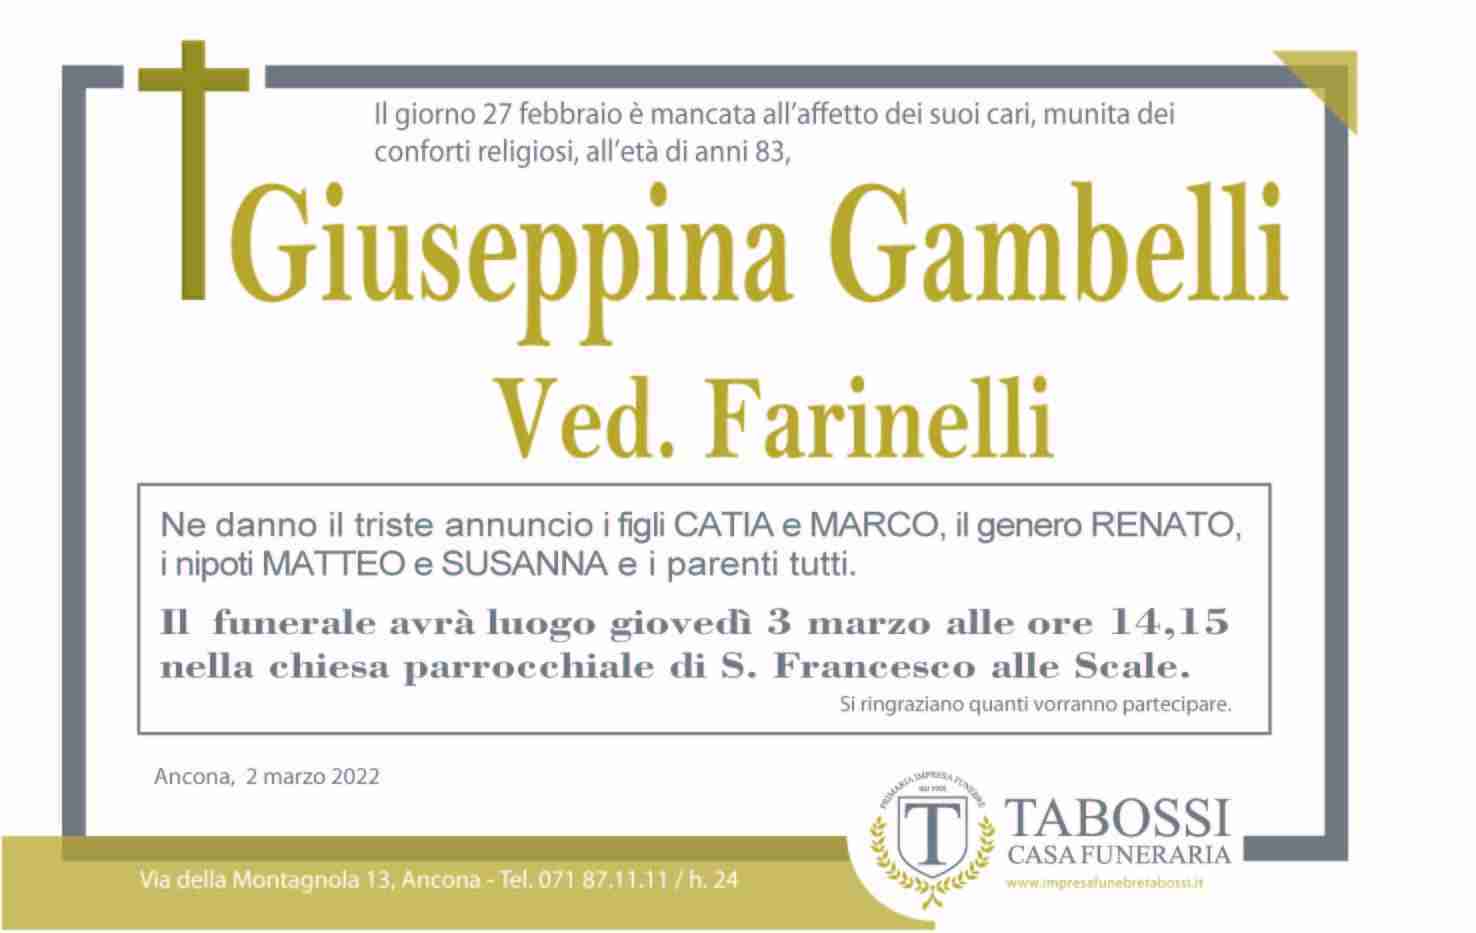 Giuseppina Gambelli